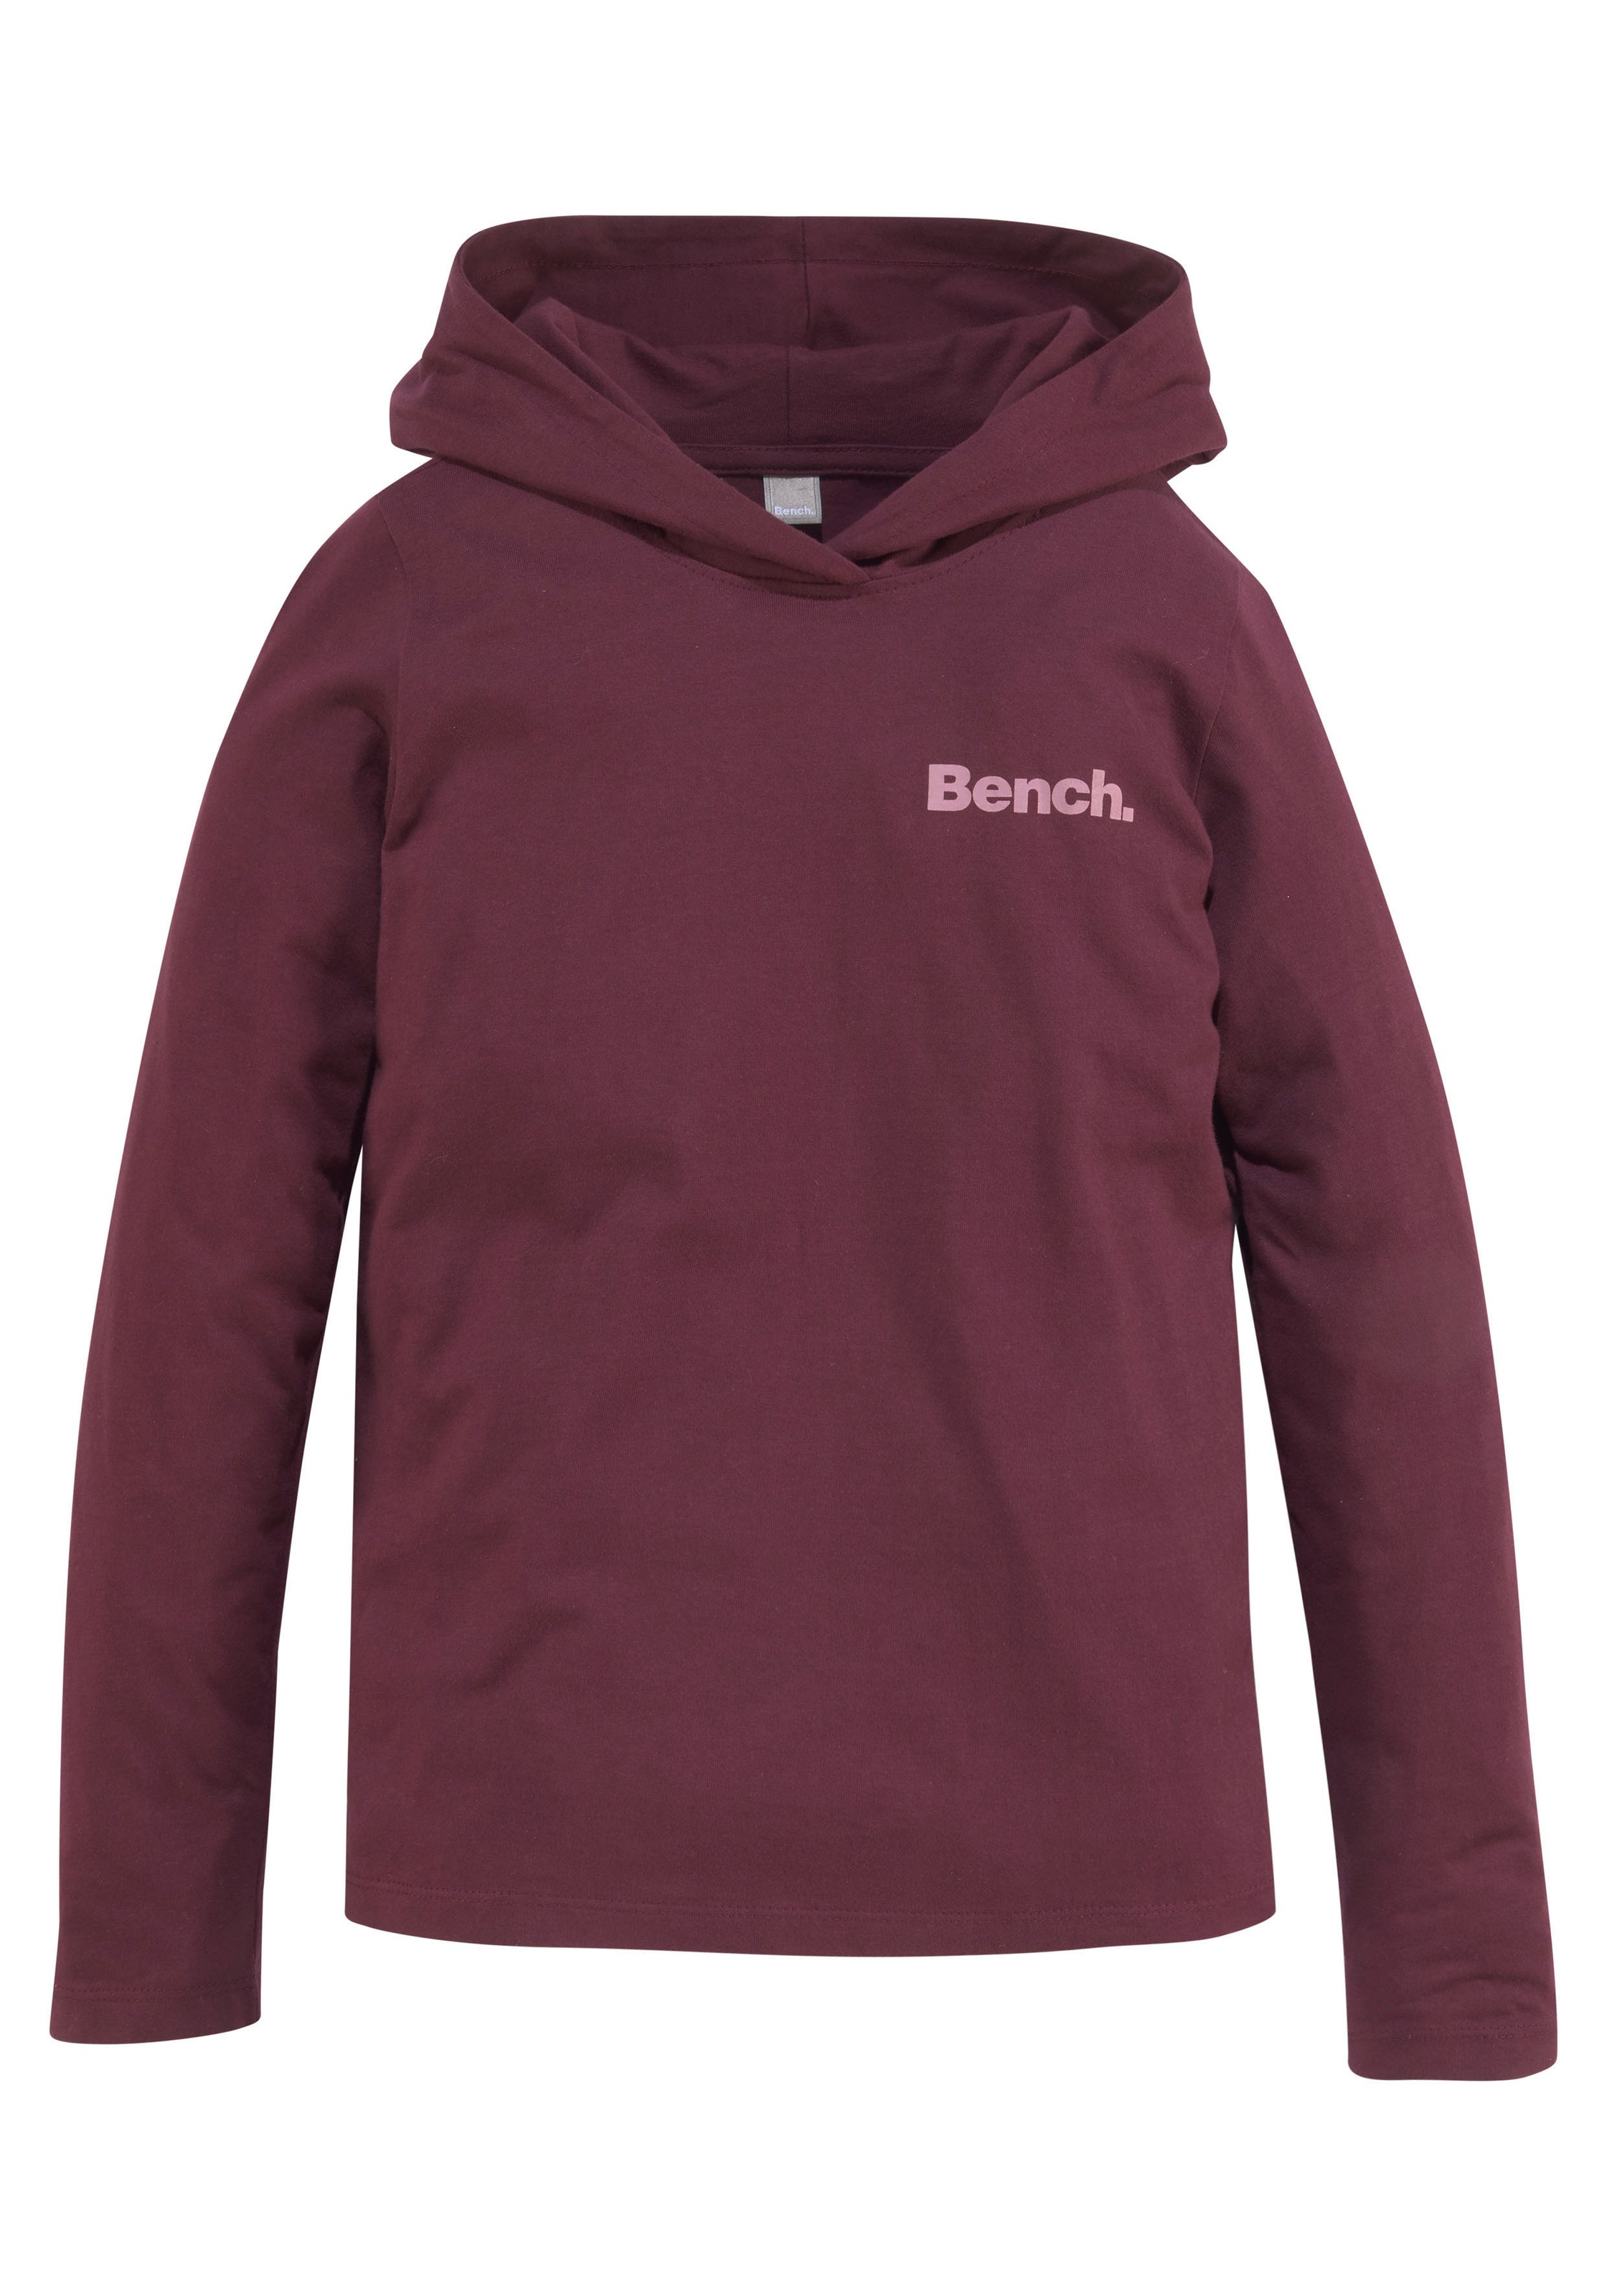 Bench. Langarmshirt, mit Kapuze und Rückendruck online kaufen | BAUR | Kapuzenshirts